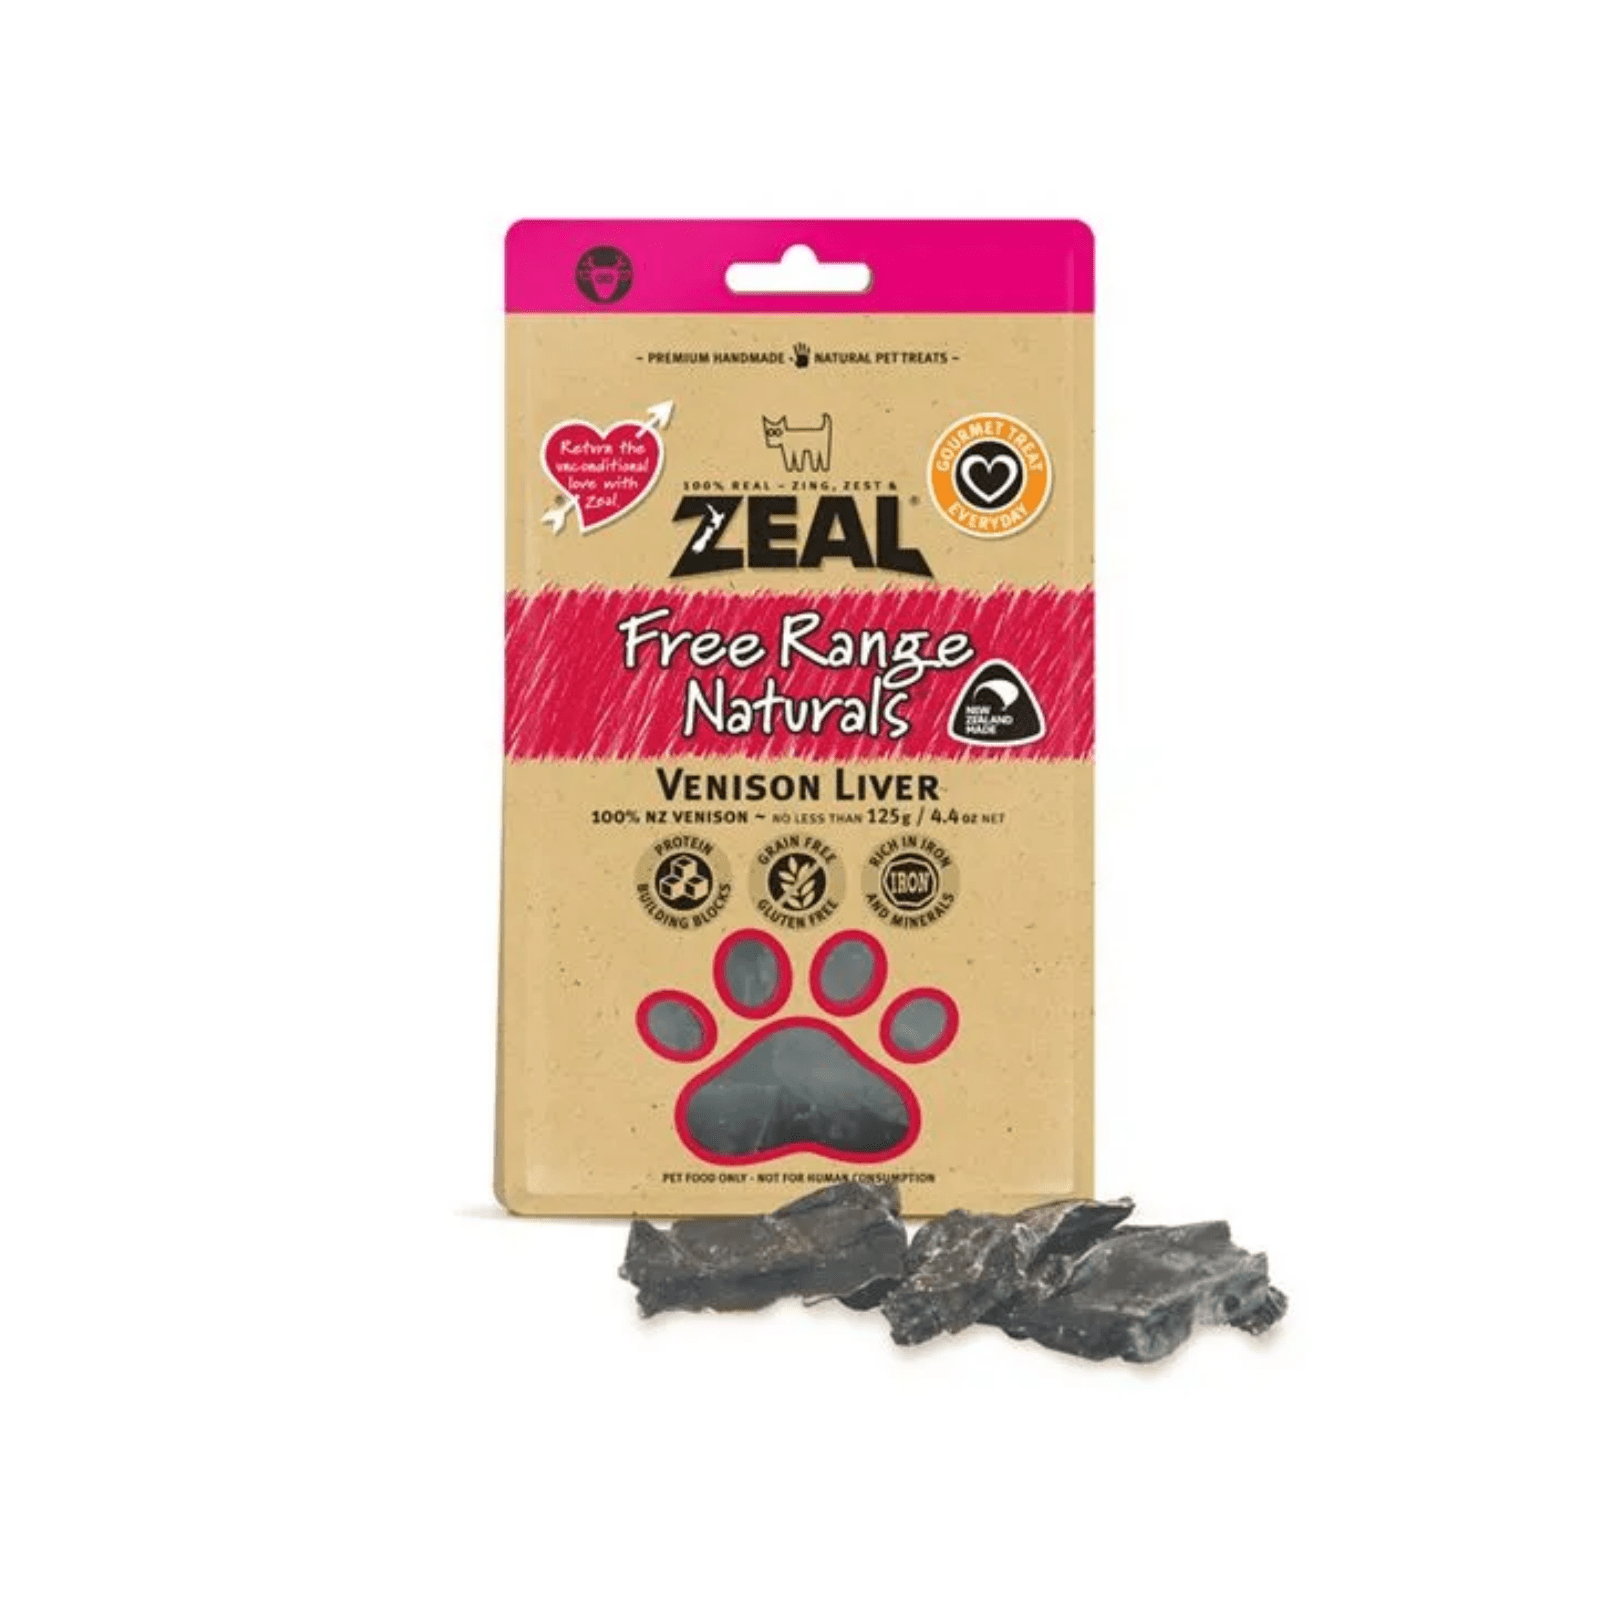 Zeal Dog Treats, Free Range Naturals Venison Liver.